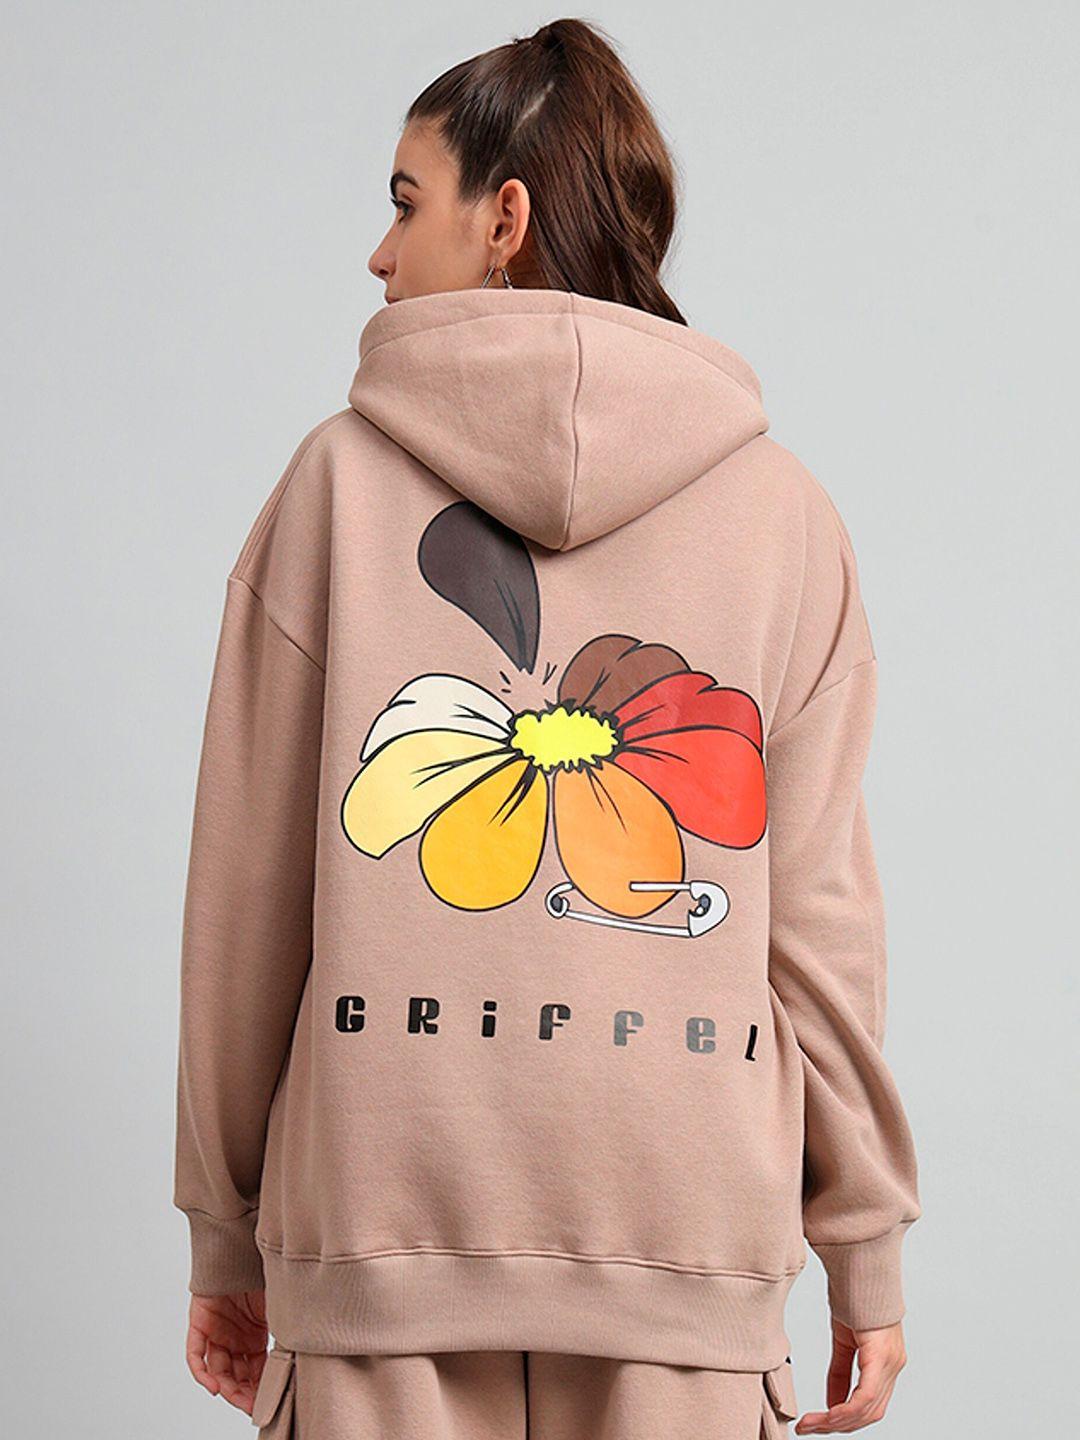 griffel-floral-printed-hooded-fleece-pullover-sweatshirt